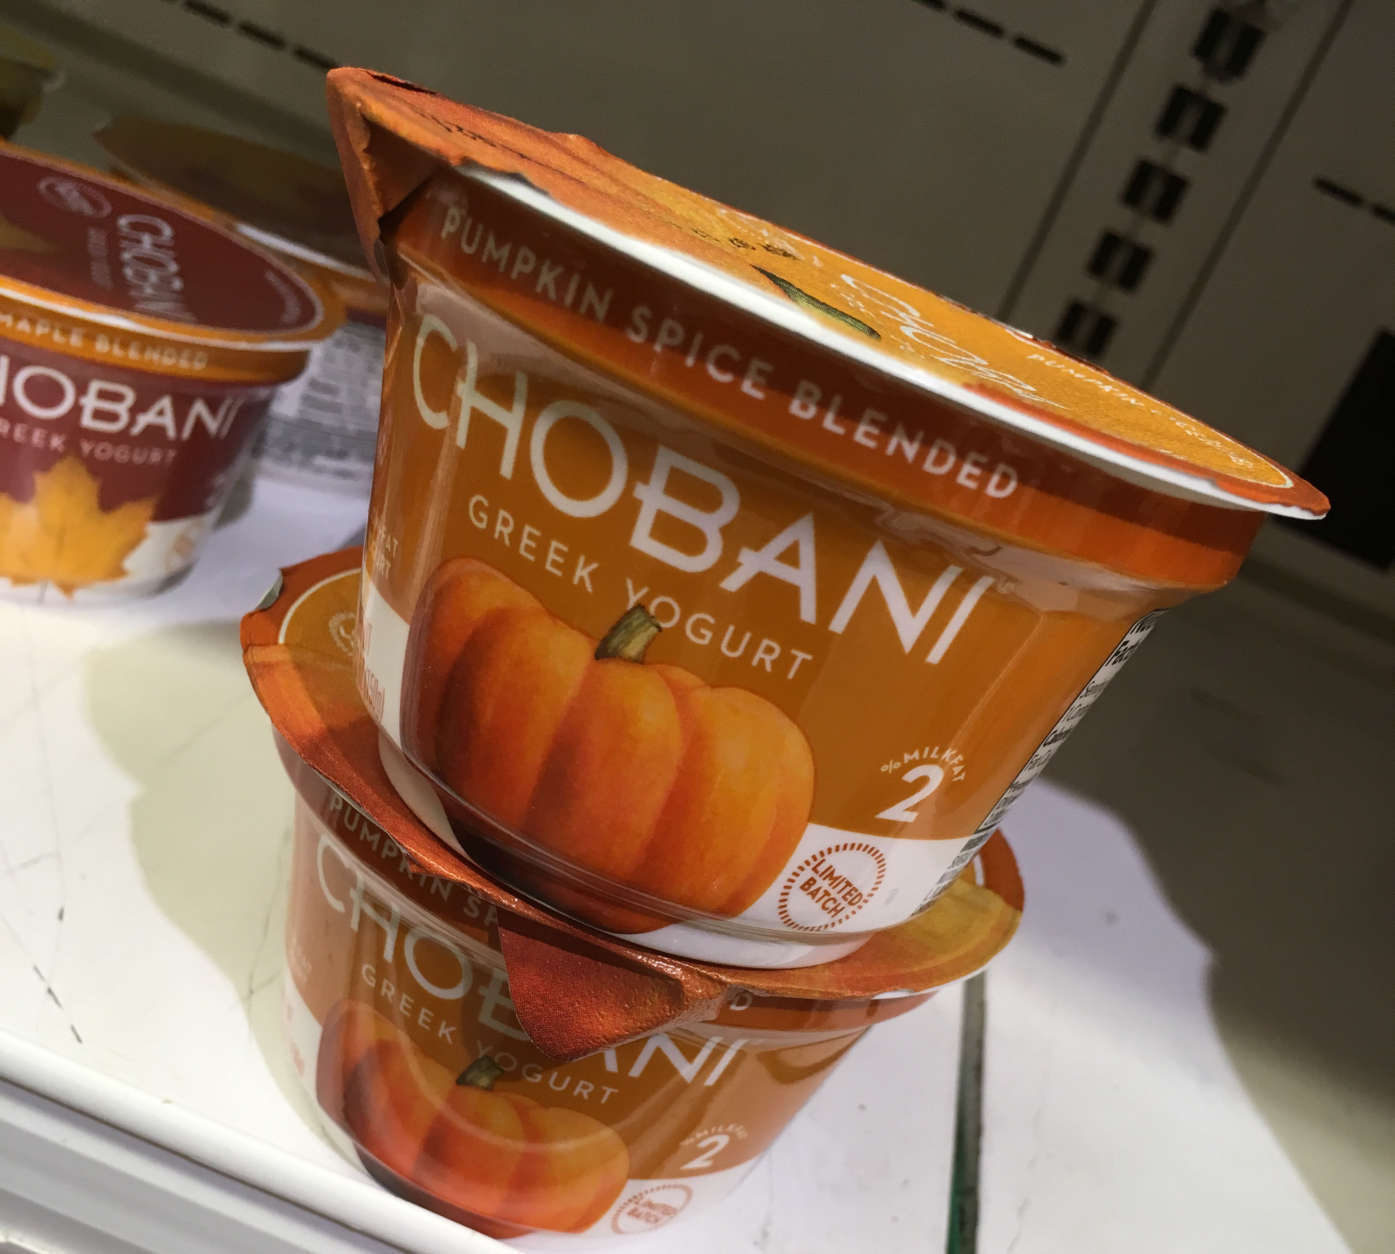 "Pumpkin spice blended" Chobani brand Greek yogurt. (WTOP/Jack Moore)